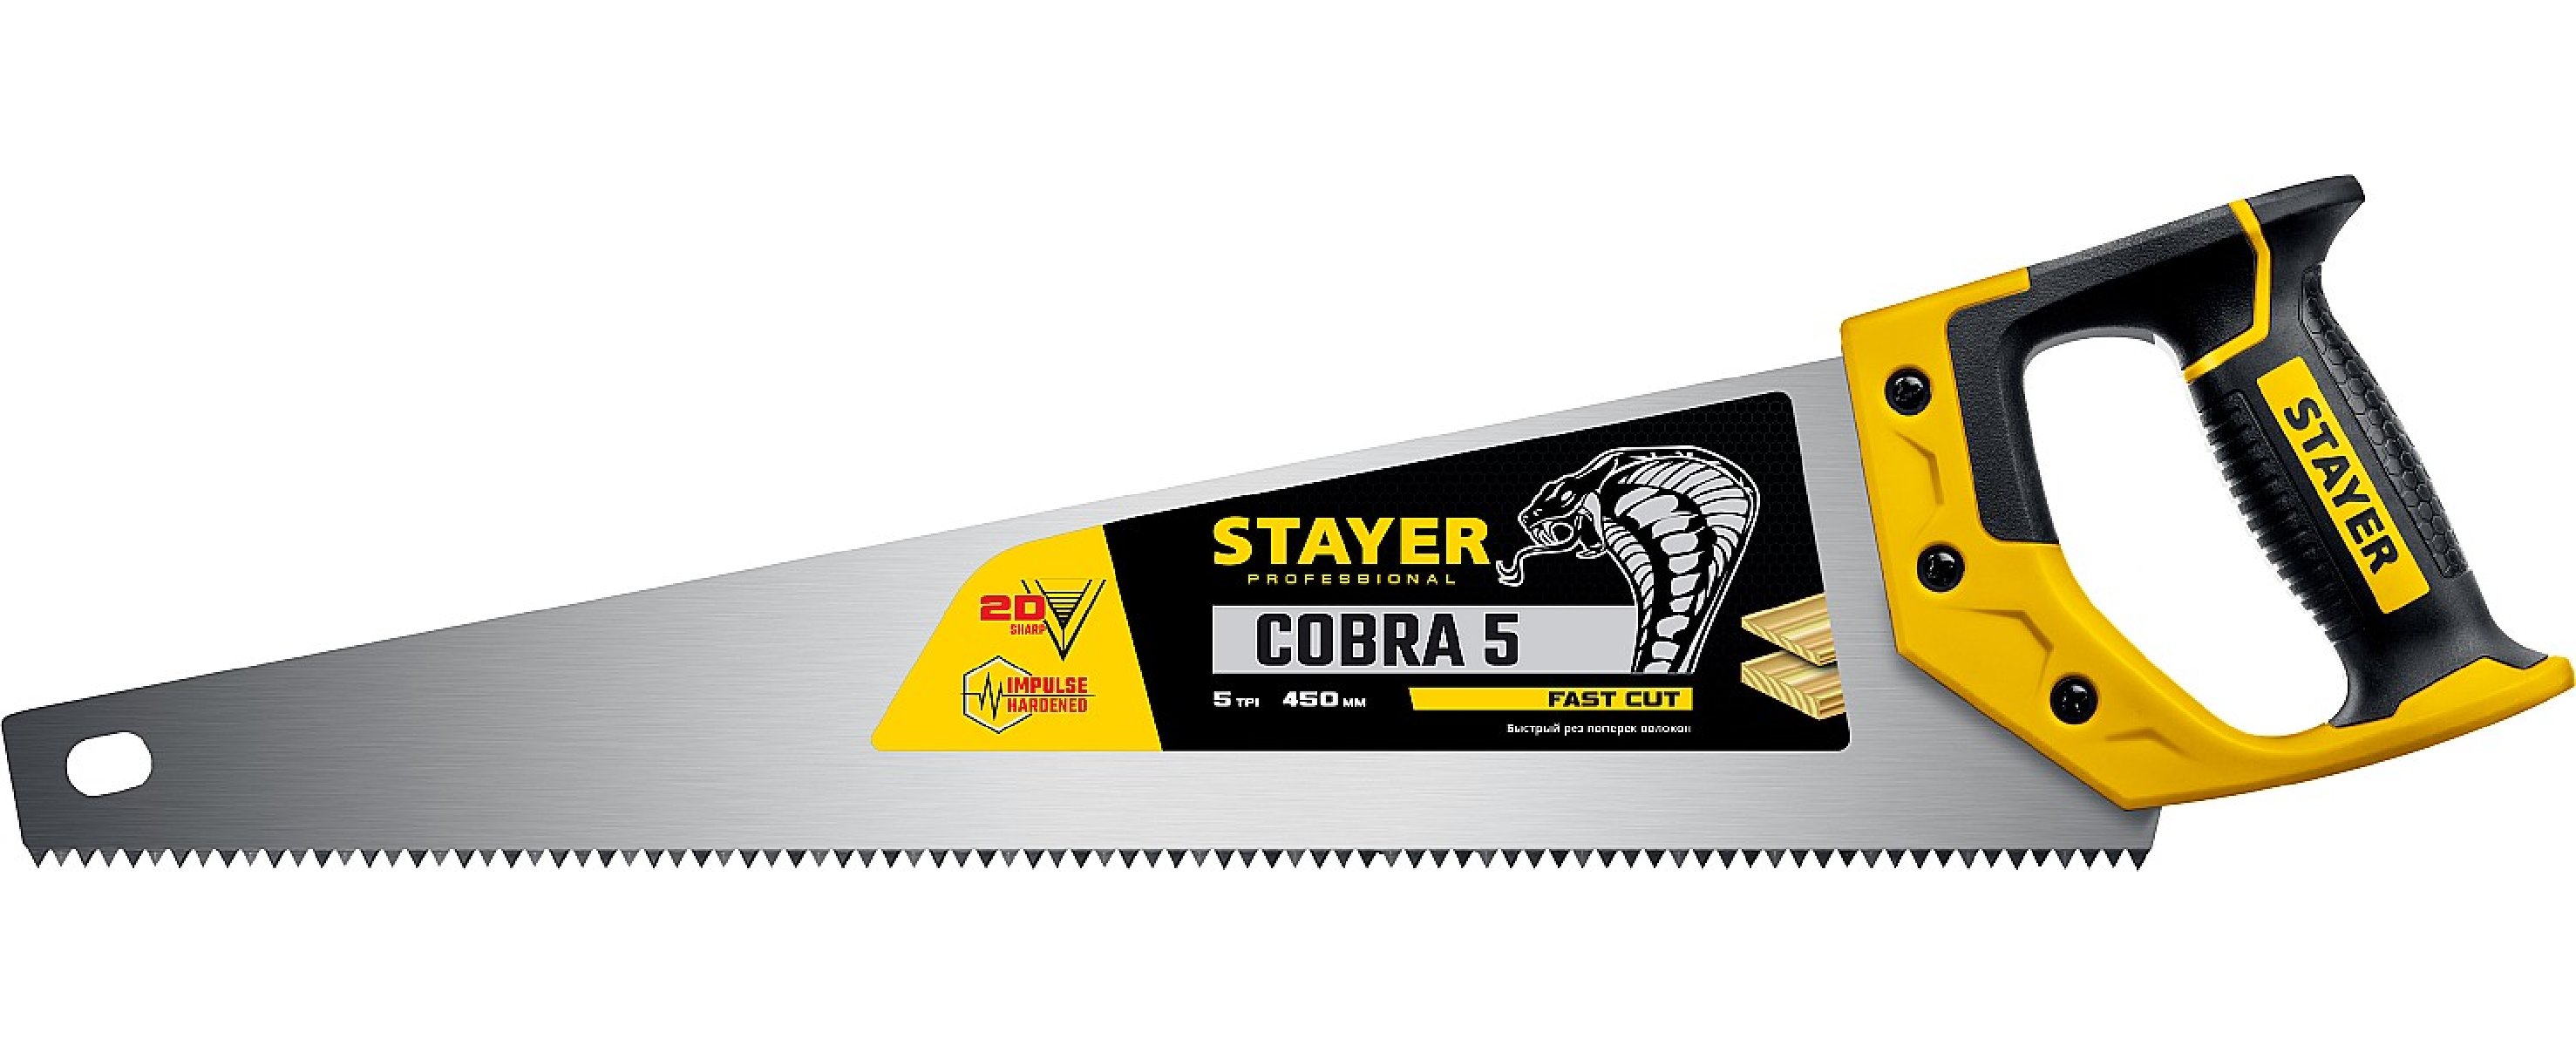    STAYER Cobra 5 450  (1506-45_z02)